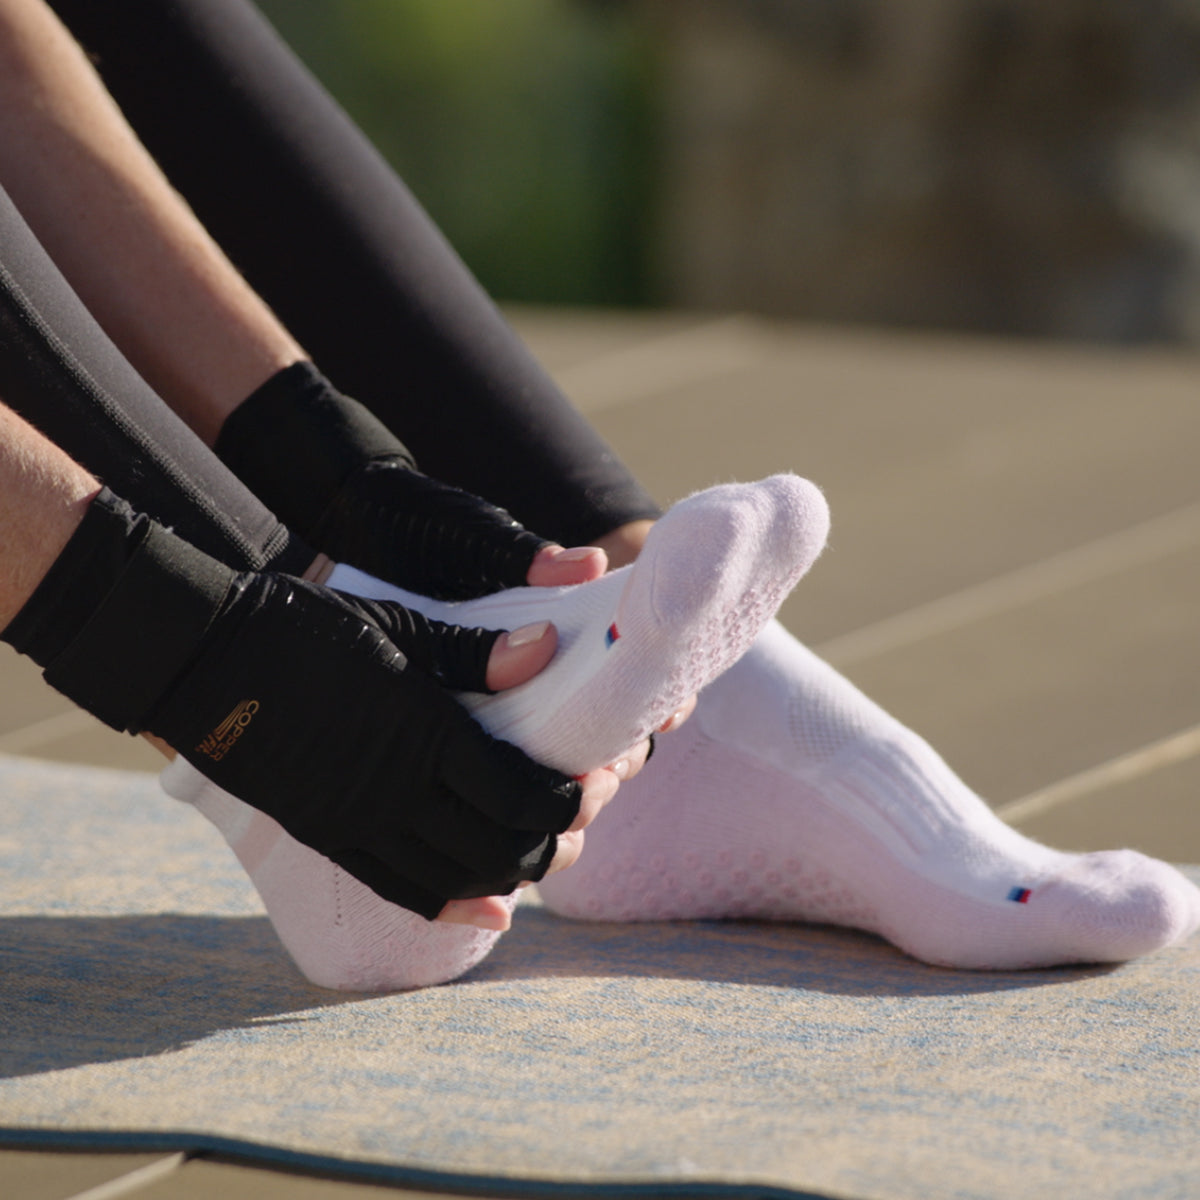 Gripperz Active Non Slip Anklet Socks Small